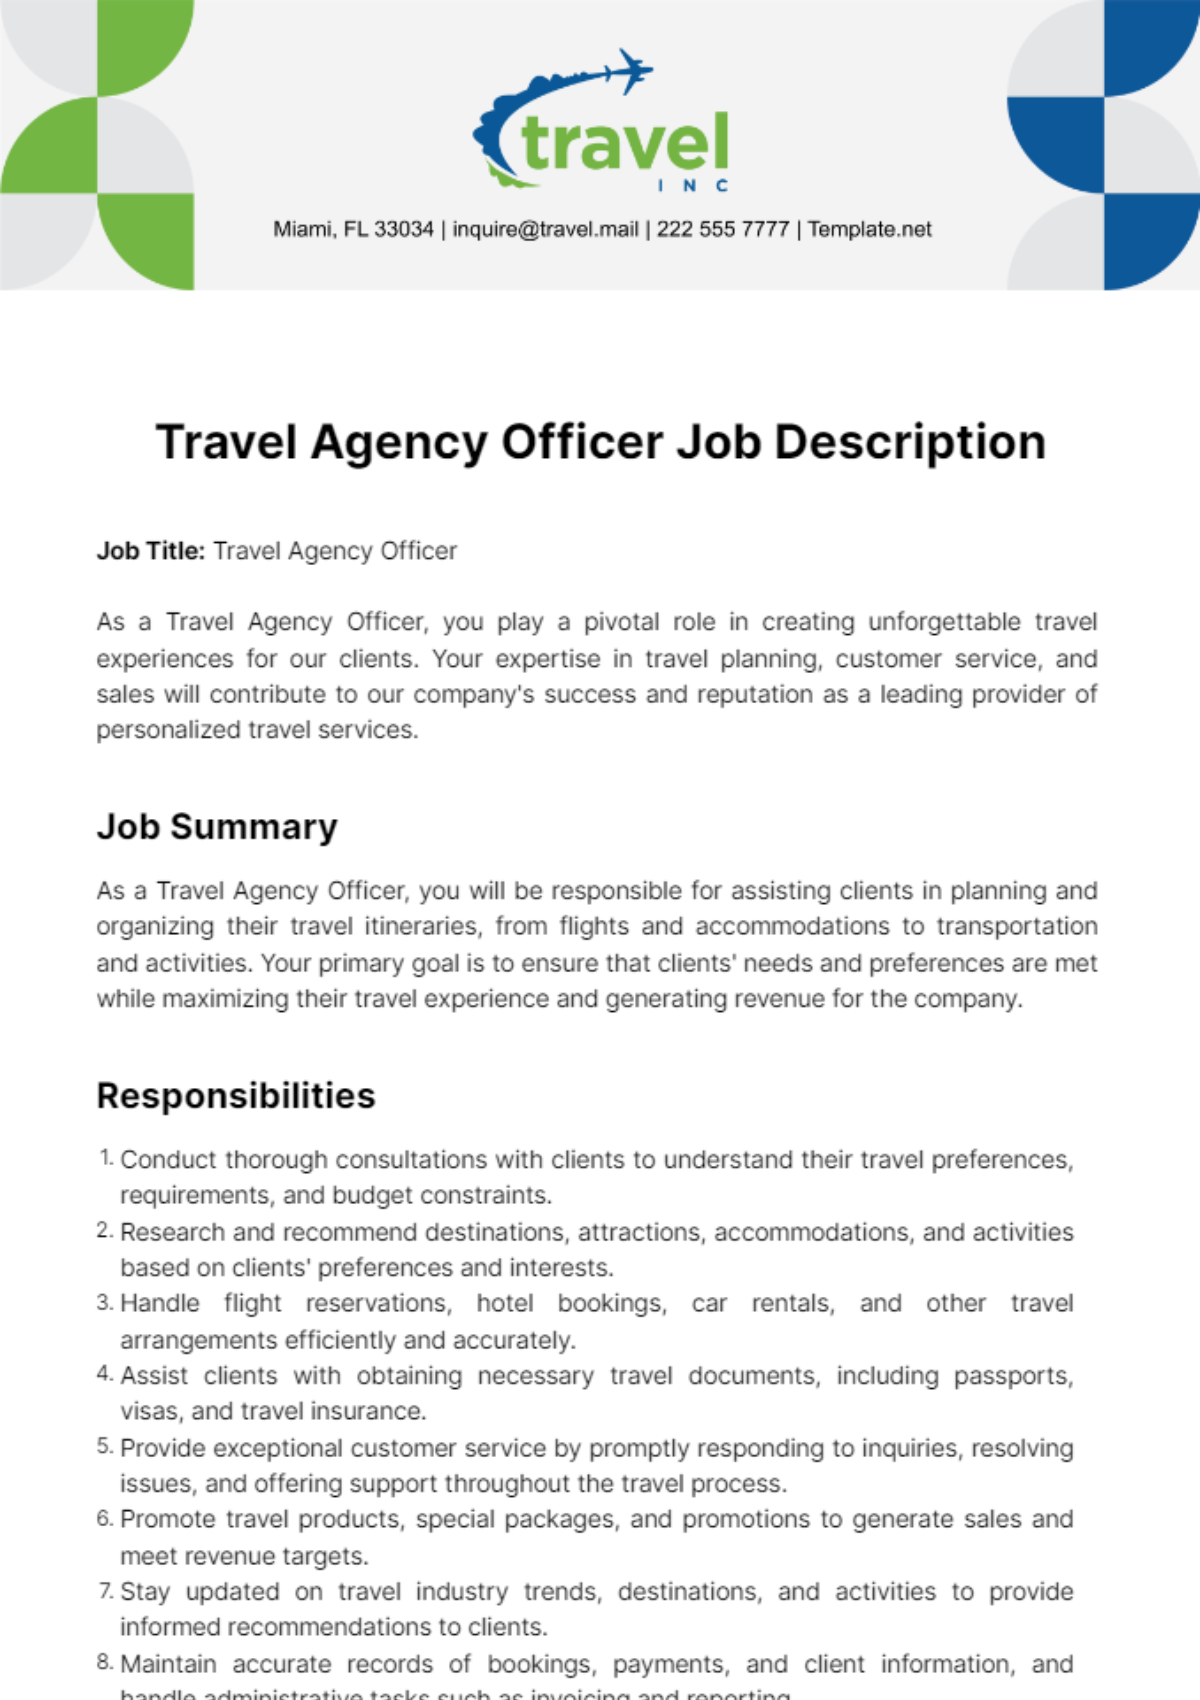 Free Travel Agency Officer Job Description Template